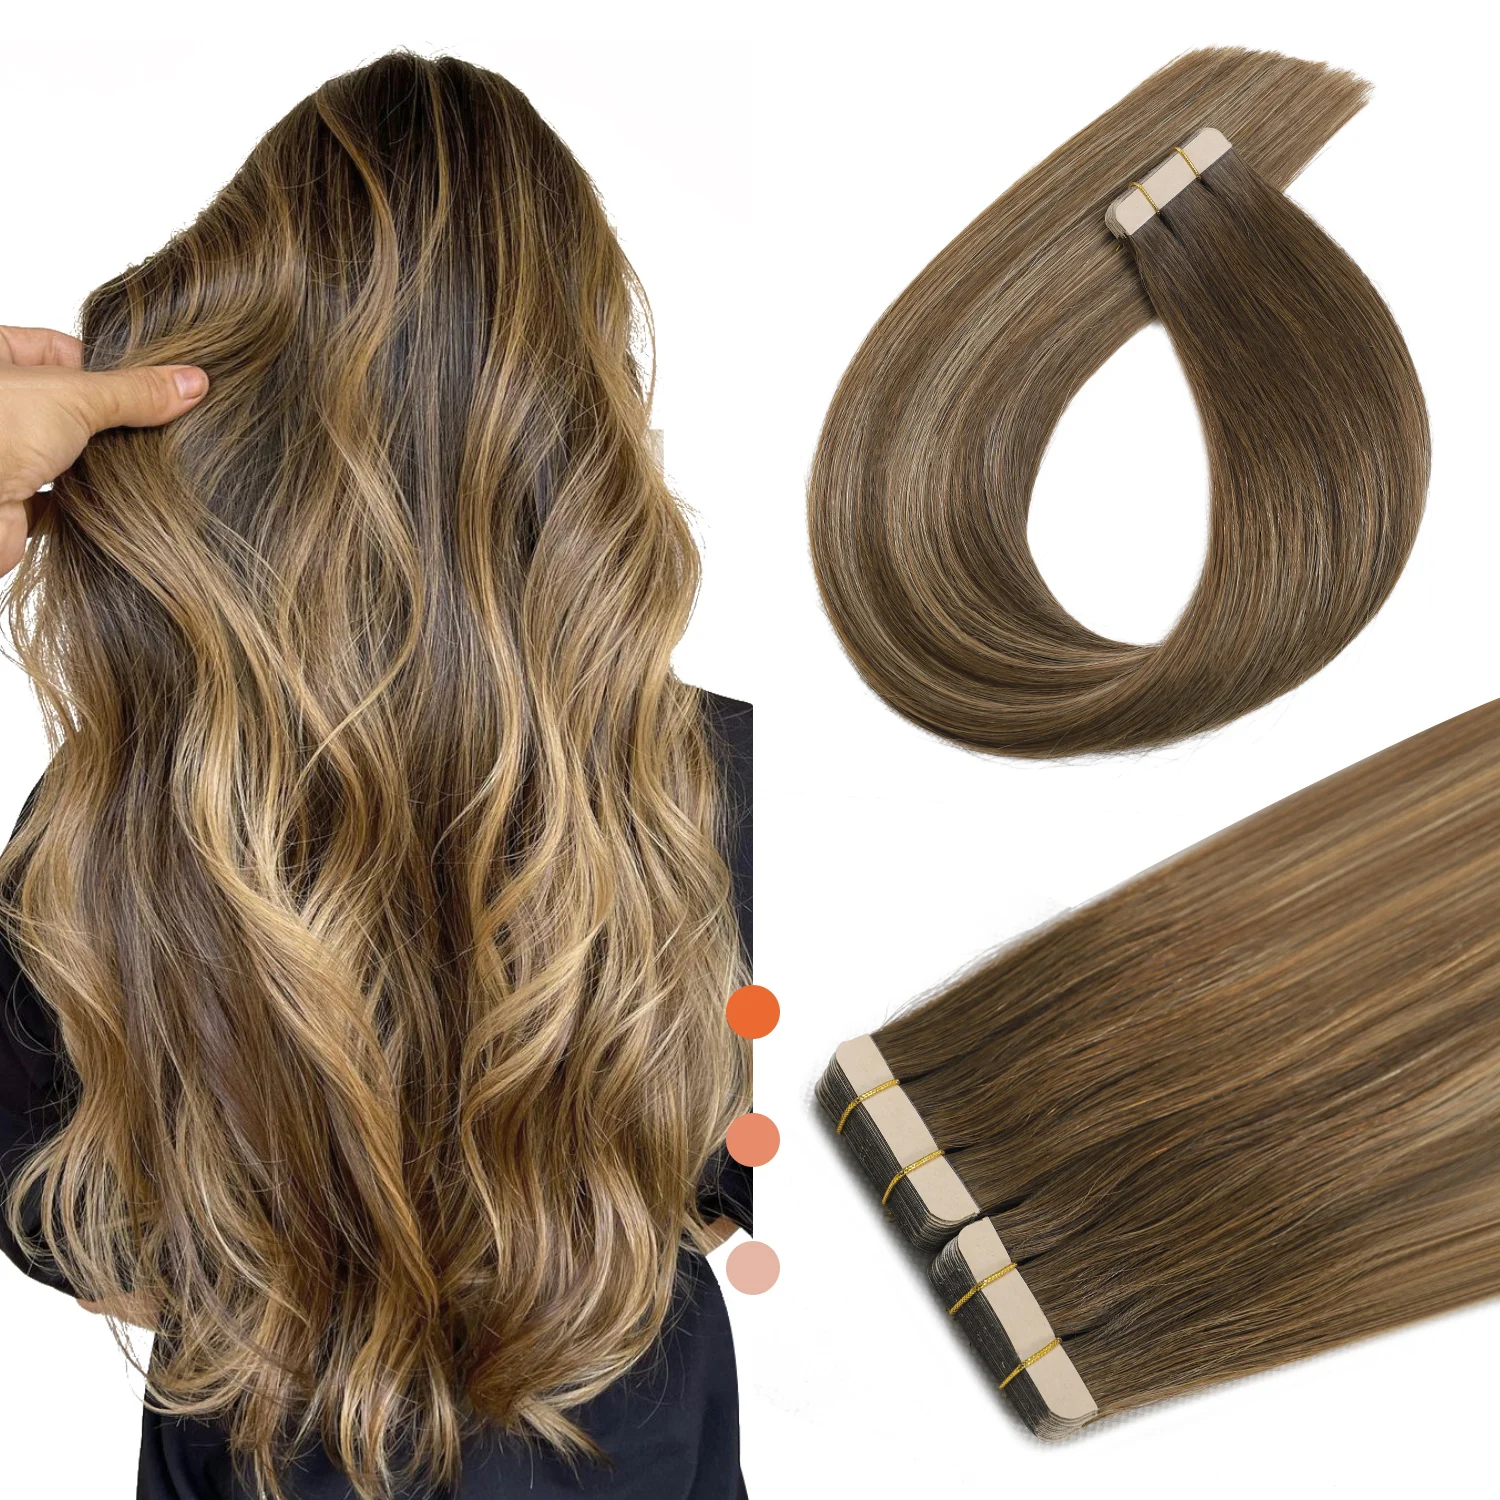 

XDhair Tape in Hair Extensions Human Hair 14"22" 50g 20pcs Balayage Chocolate Brown to Caramel Blonde Tape Hair Extensions